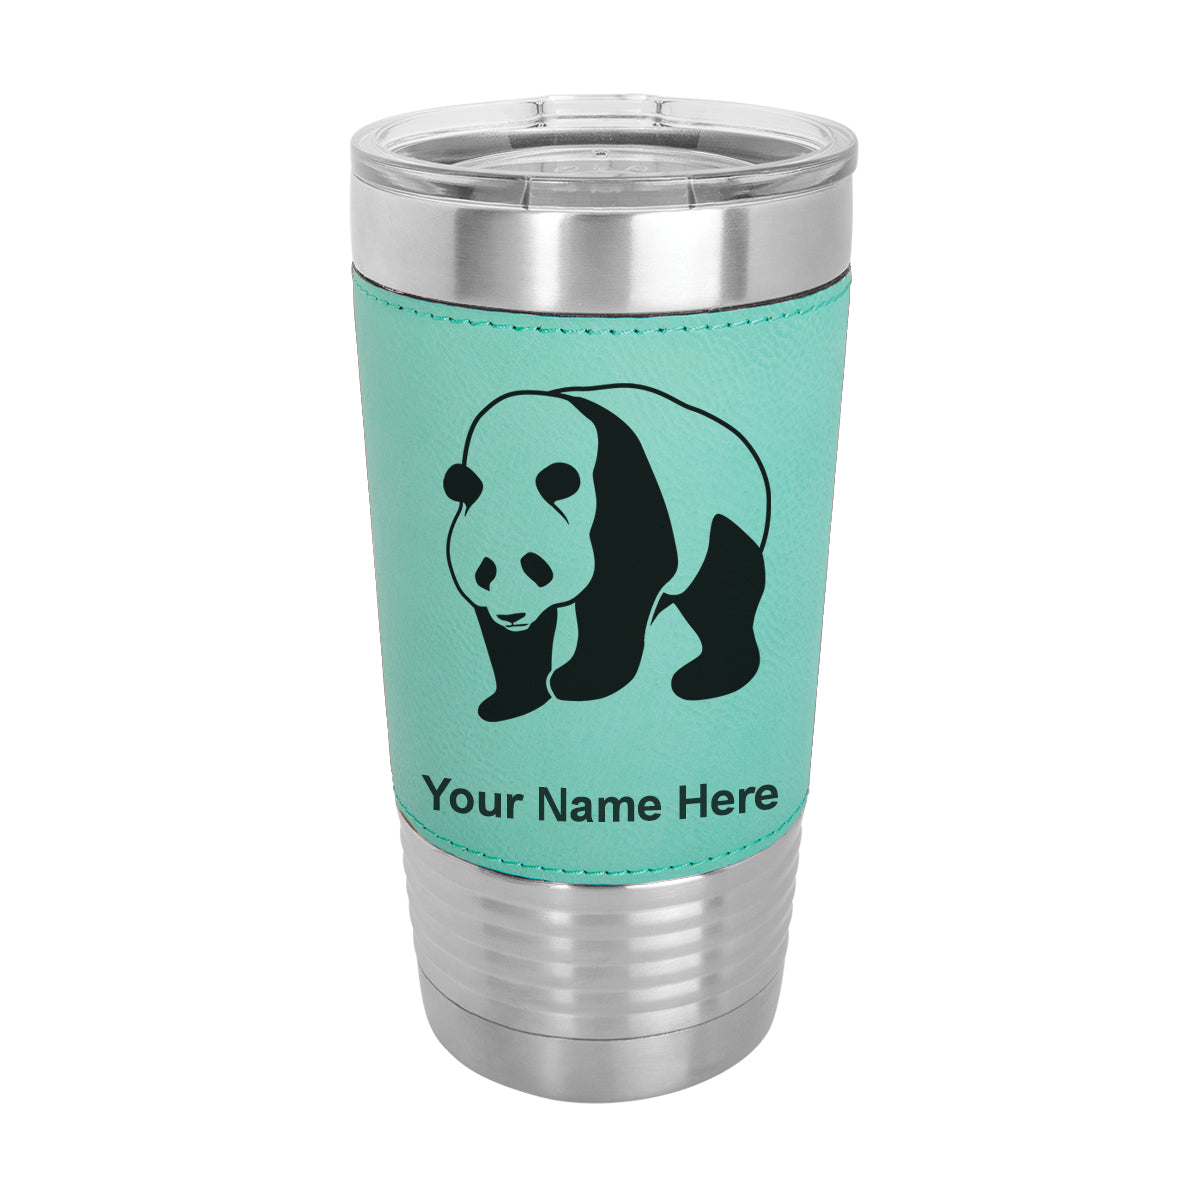 20oz Faux Leather Tumbler Mug, Panda Bear, Personalized Engraving Included - LaserGram Custom Engraved Gifts